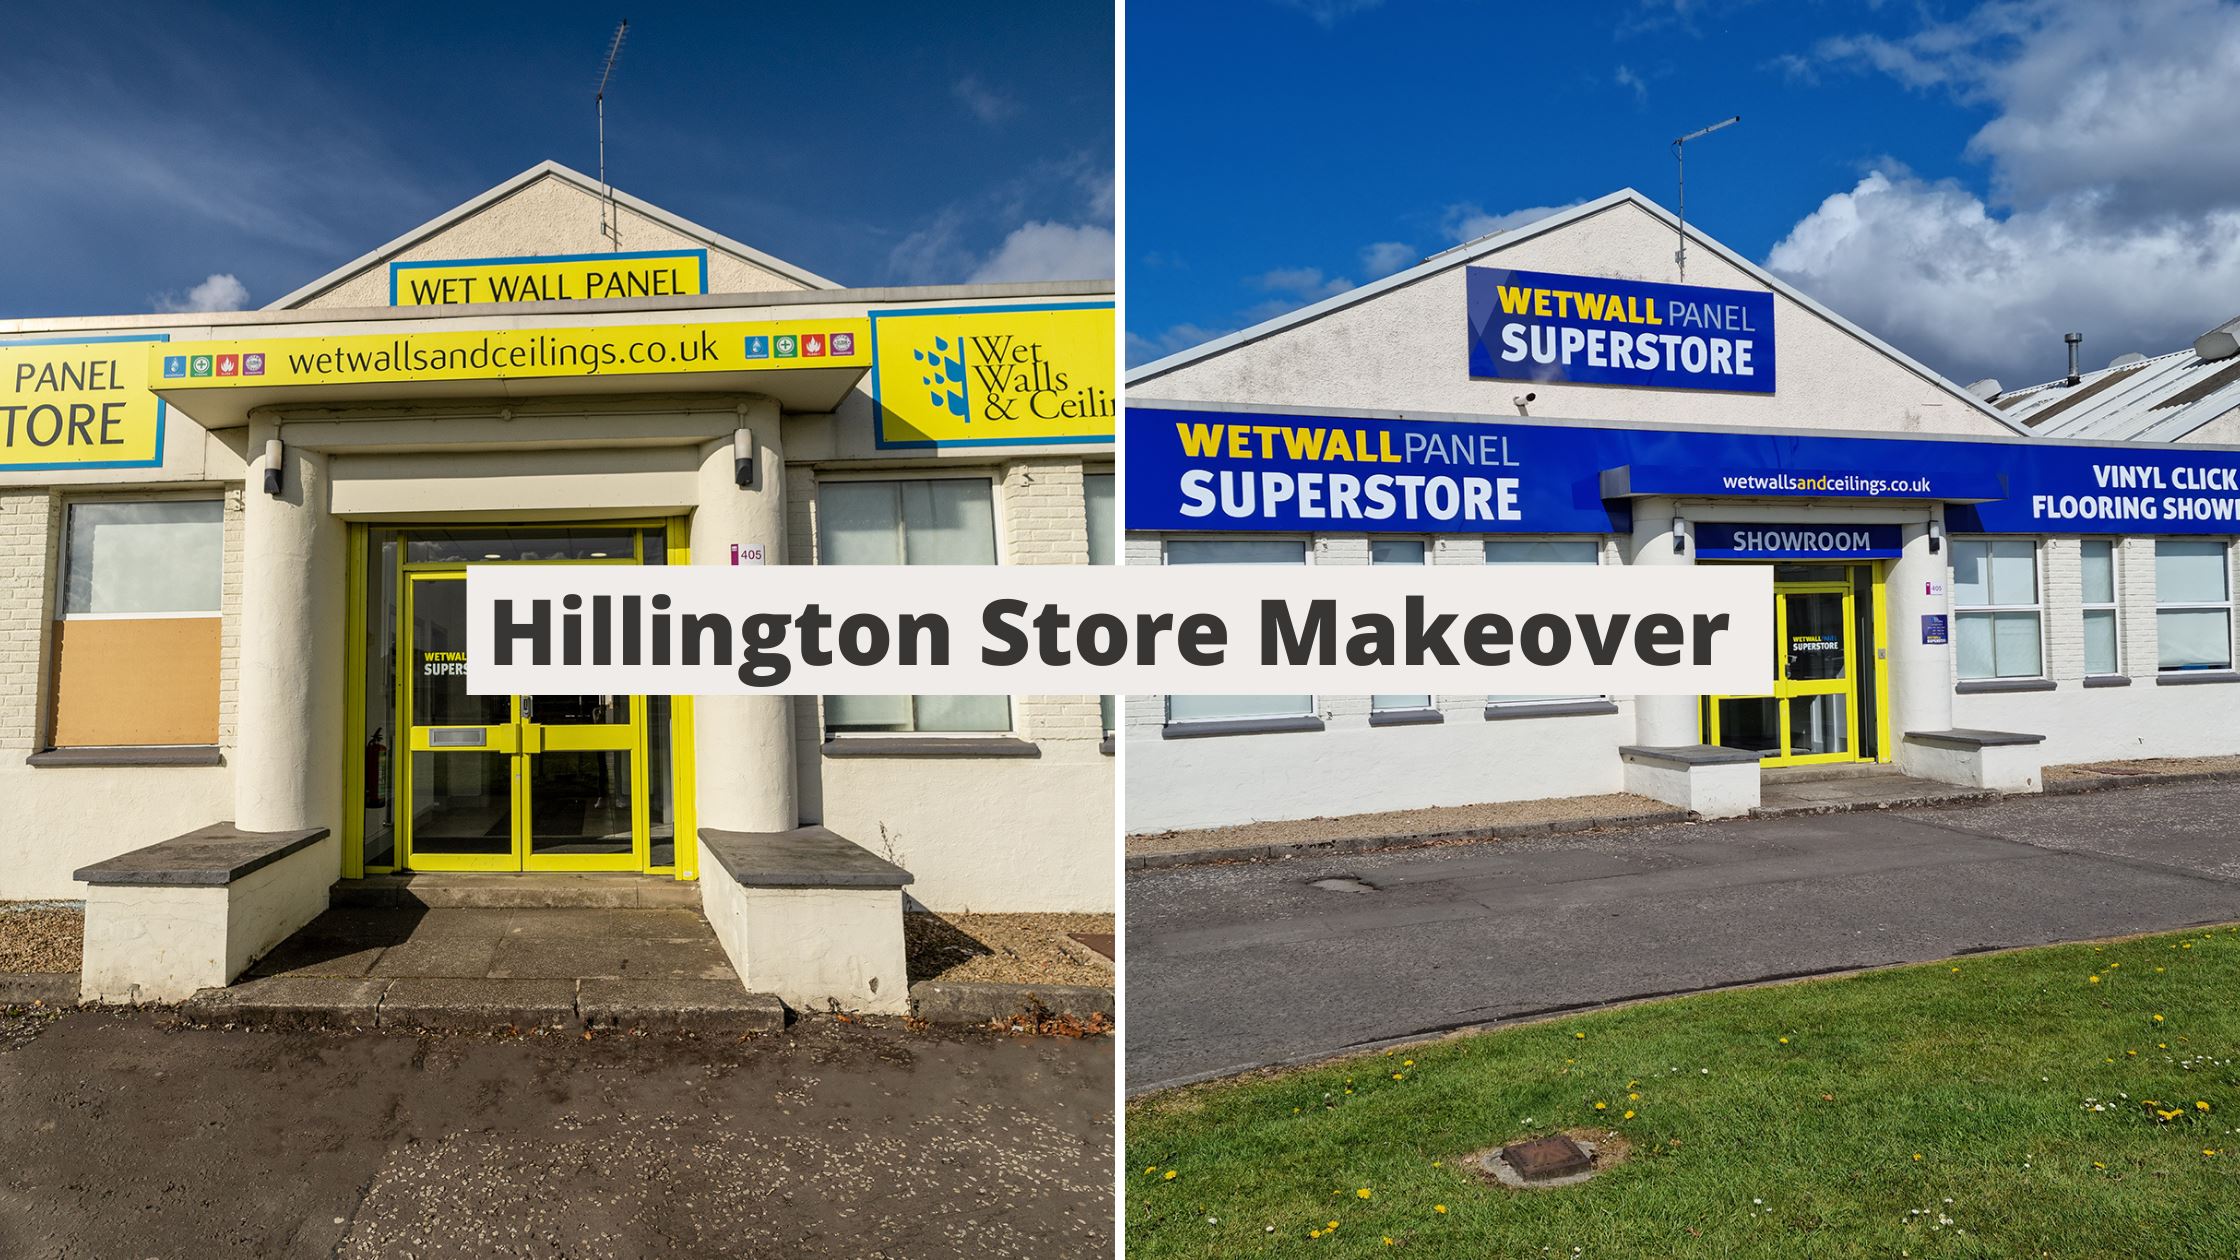 Hillington Store Makeover